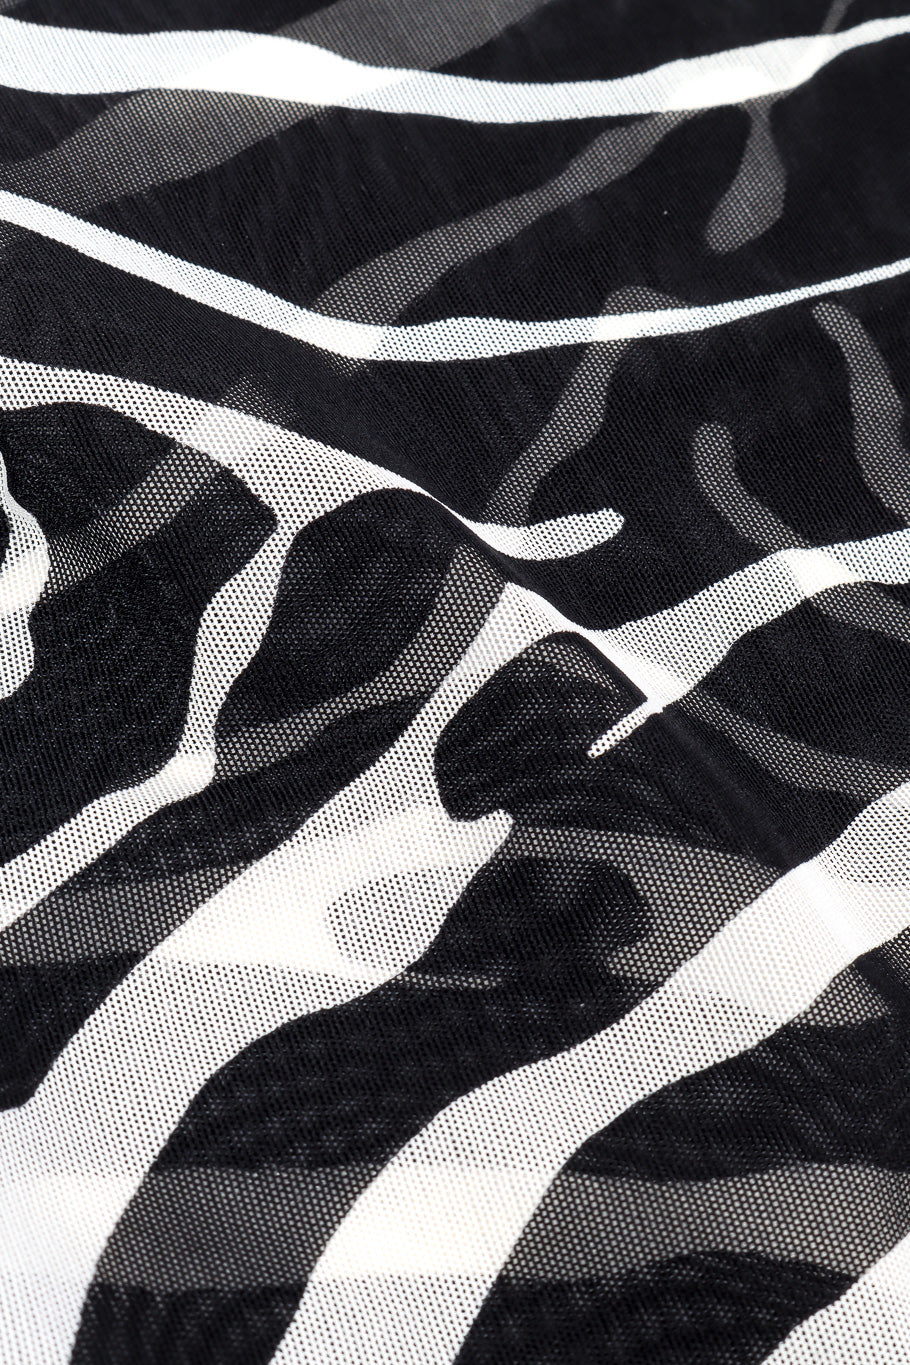 Dolce & Gabbana zebra print mesh camisole top fabric details @recessla